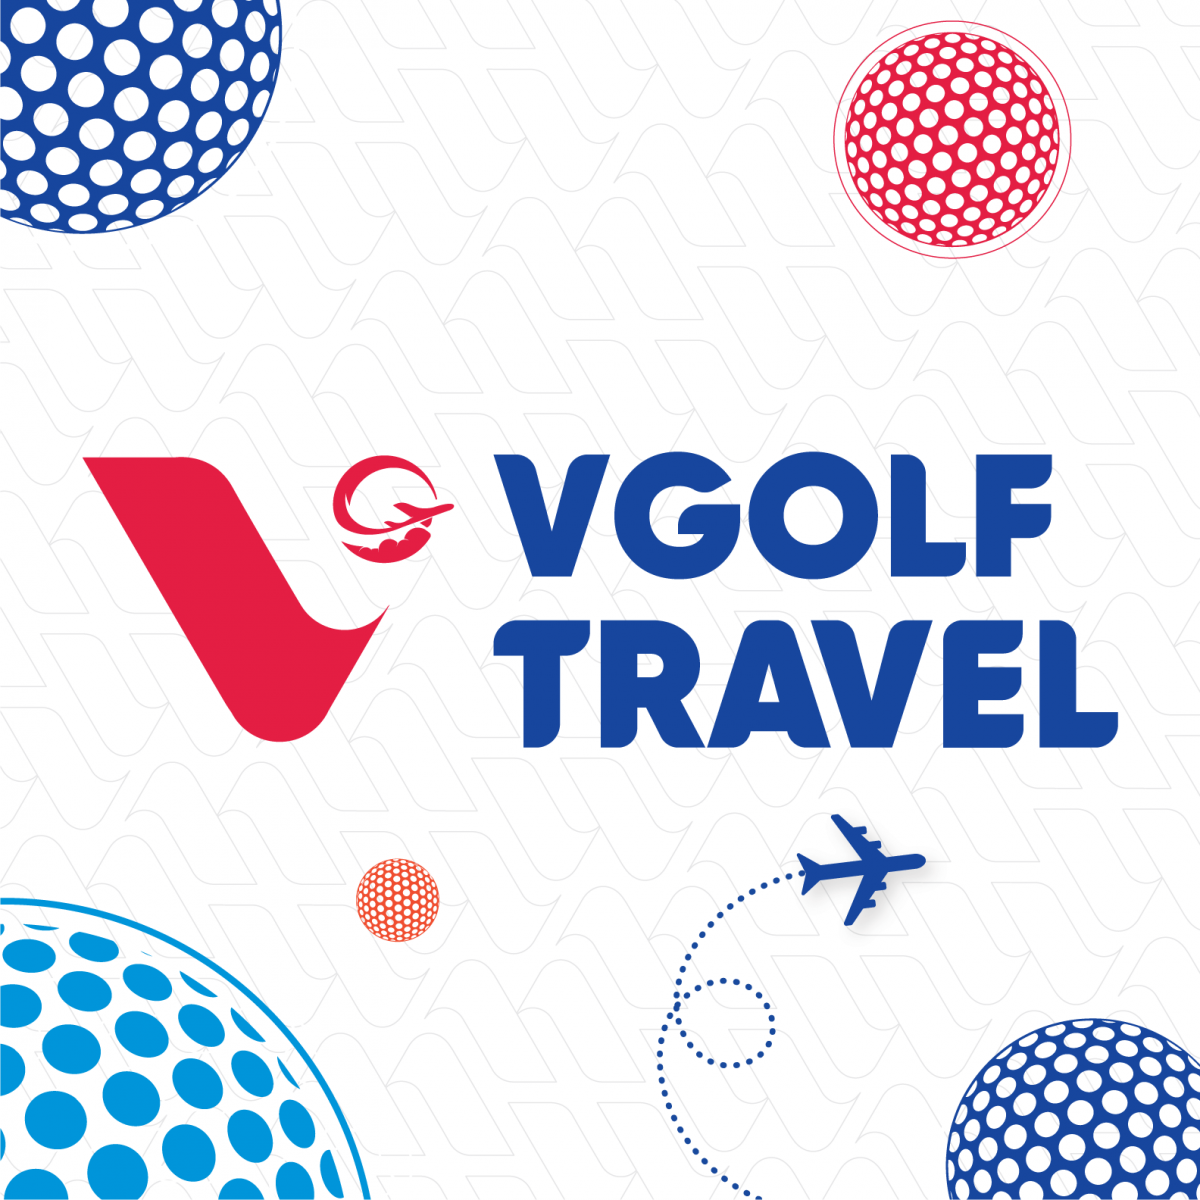 VGolf Travel - Luxury Golf Tours